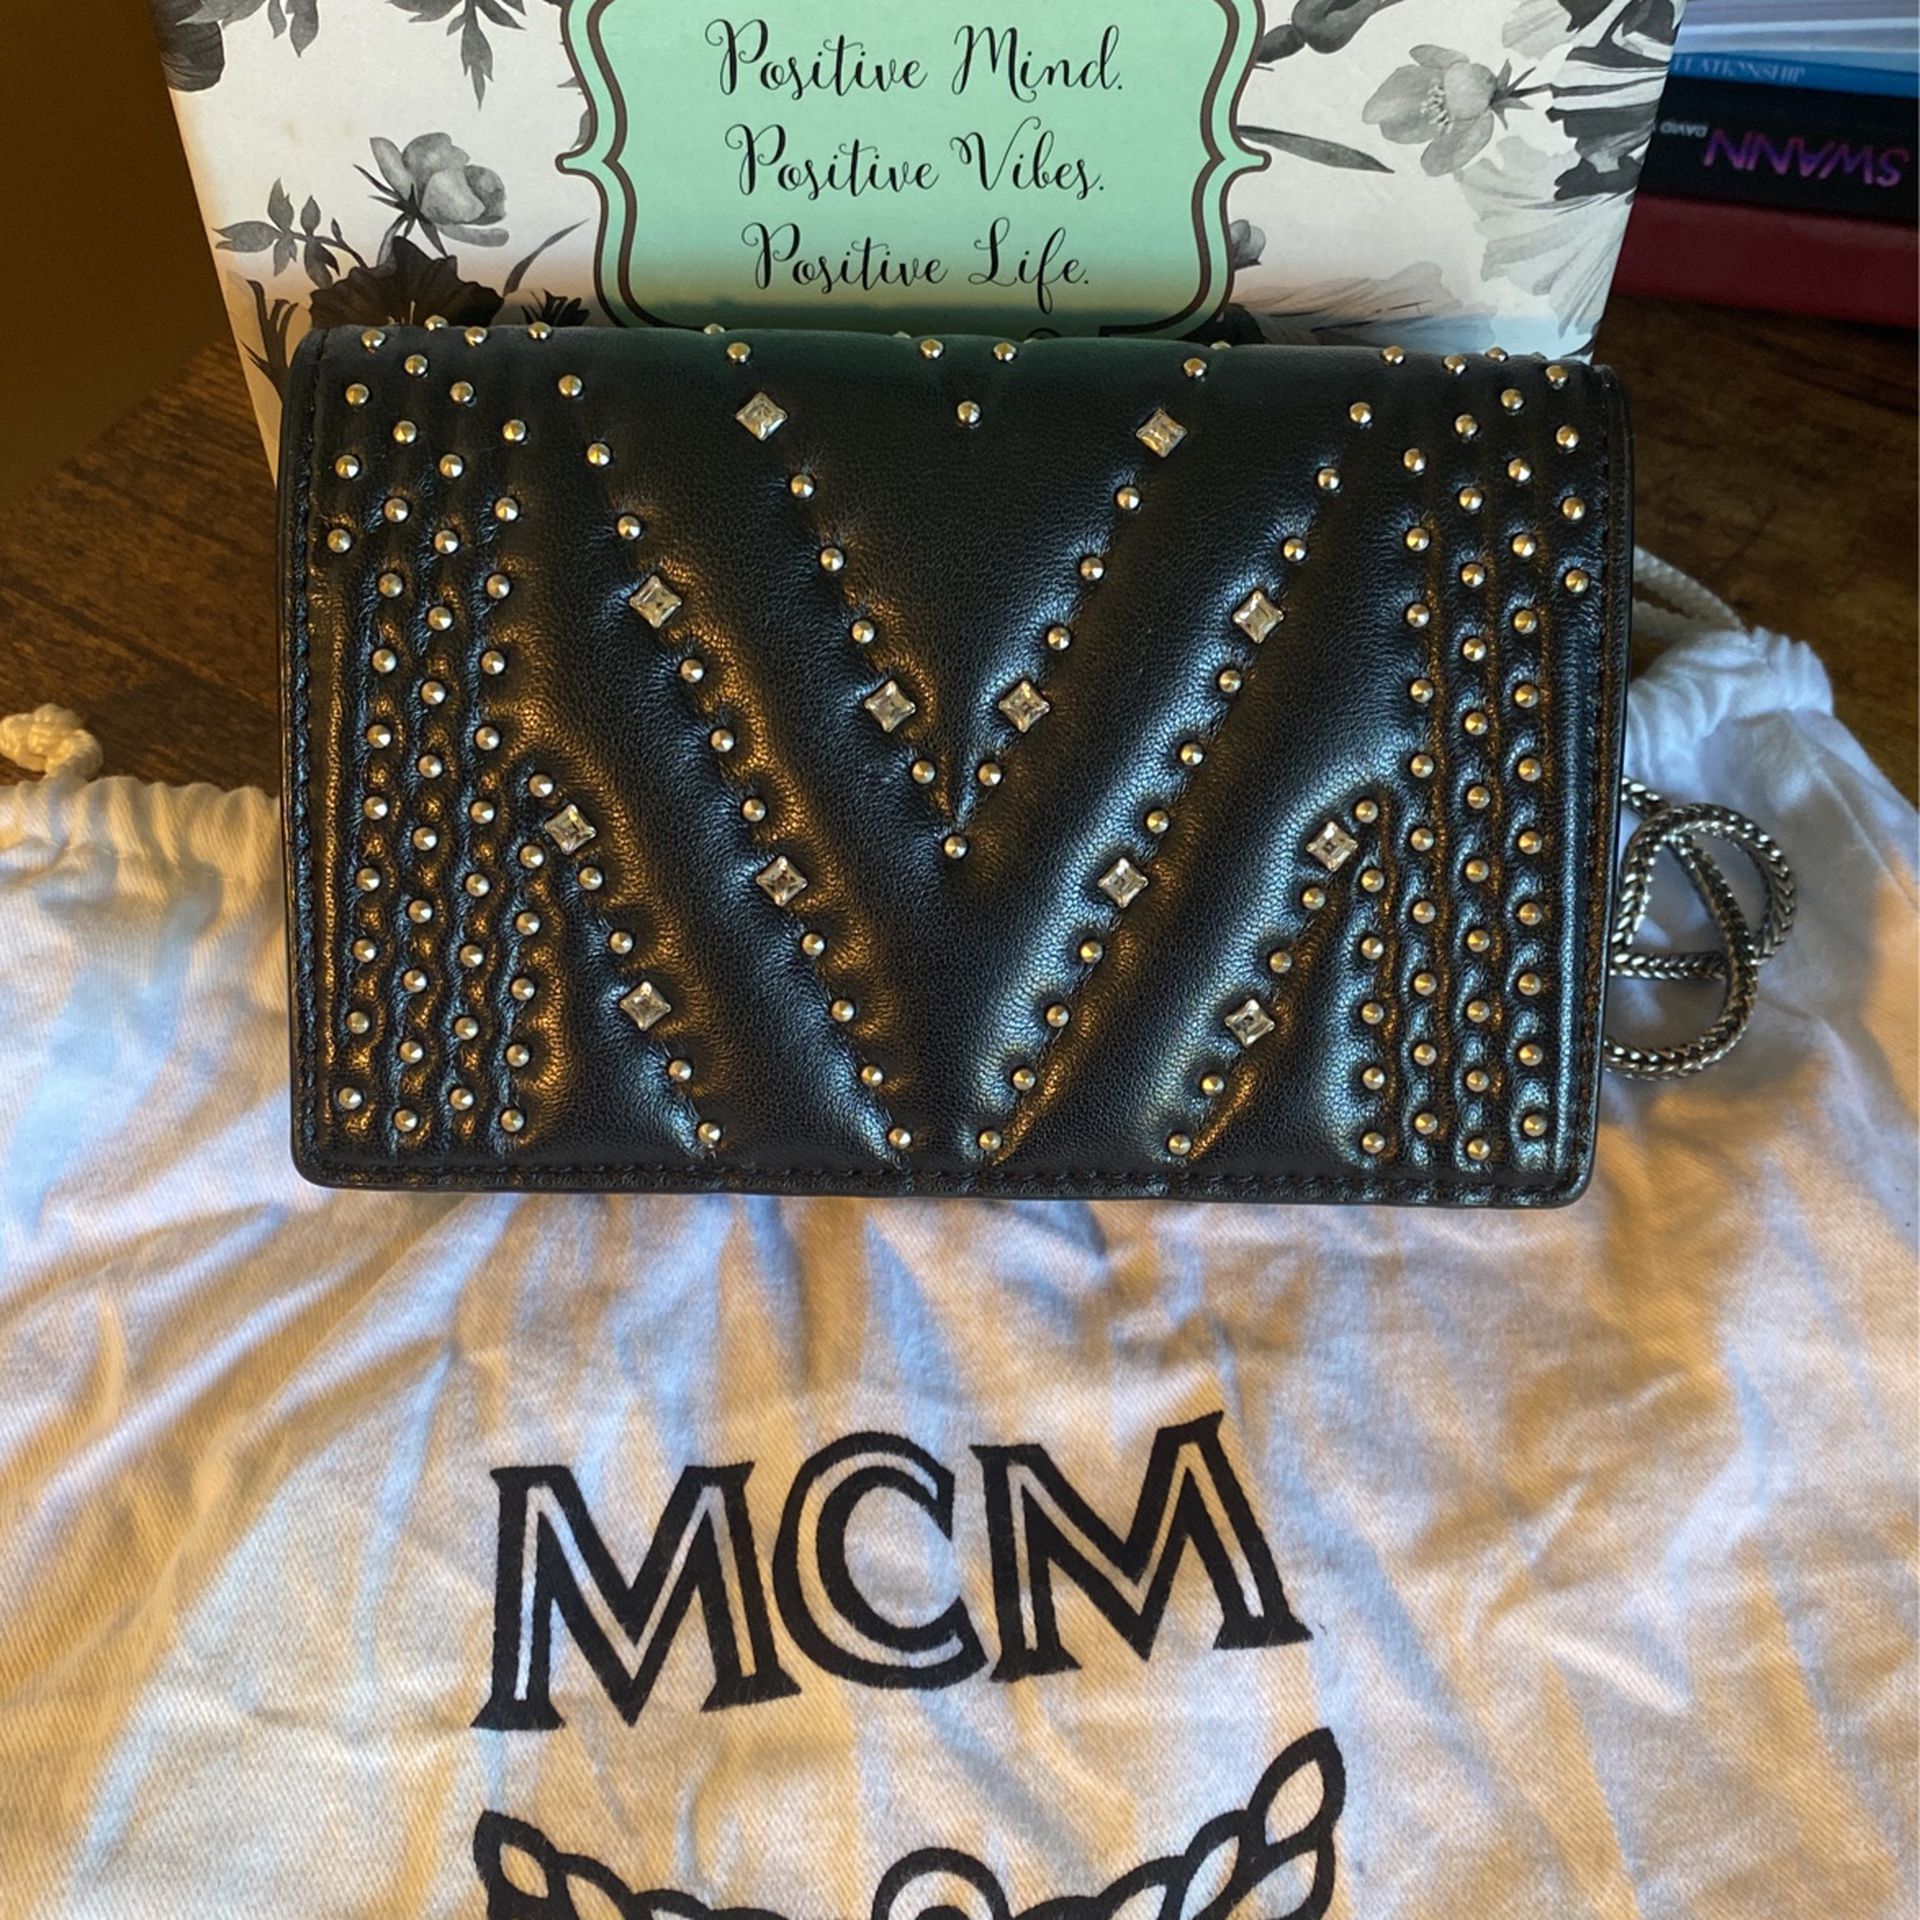 Mint Condition-Cute and Dainty MCM Handbag 